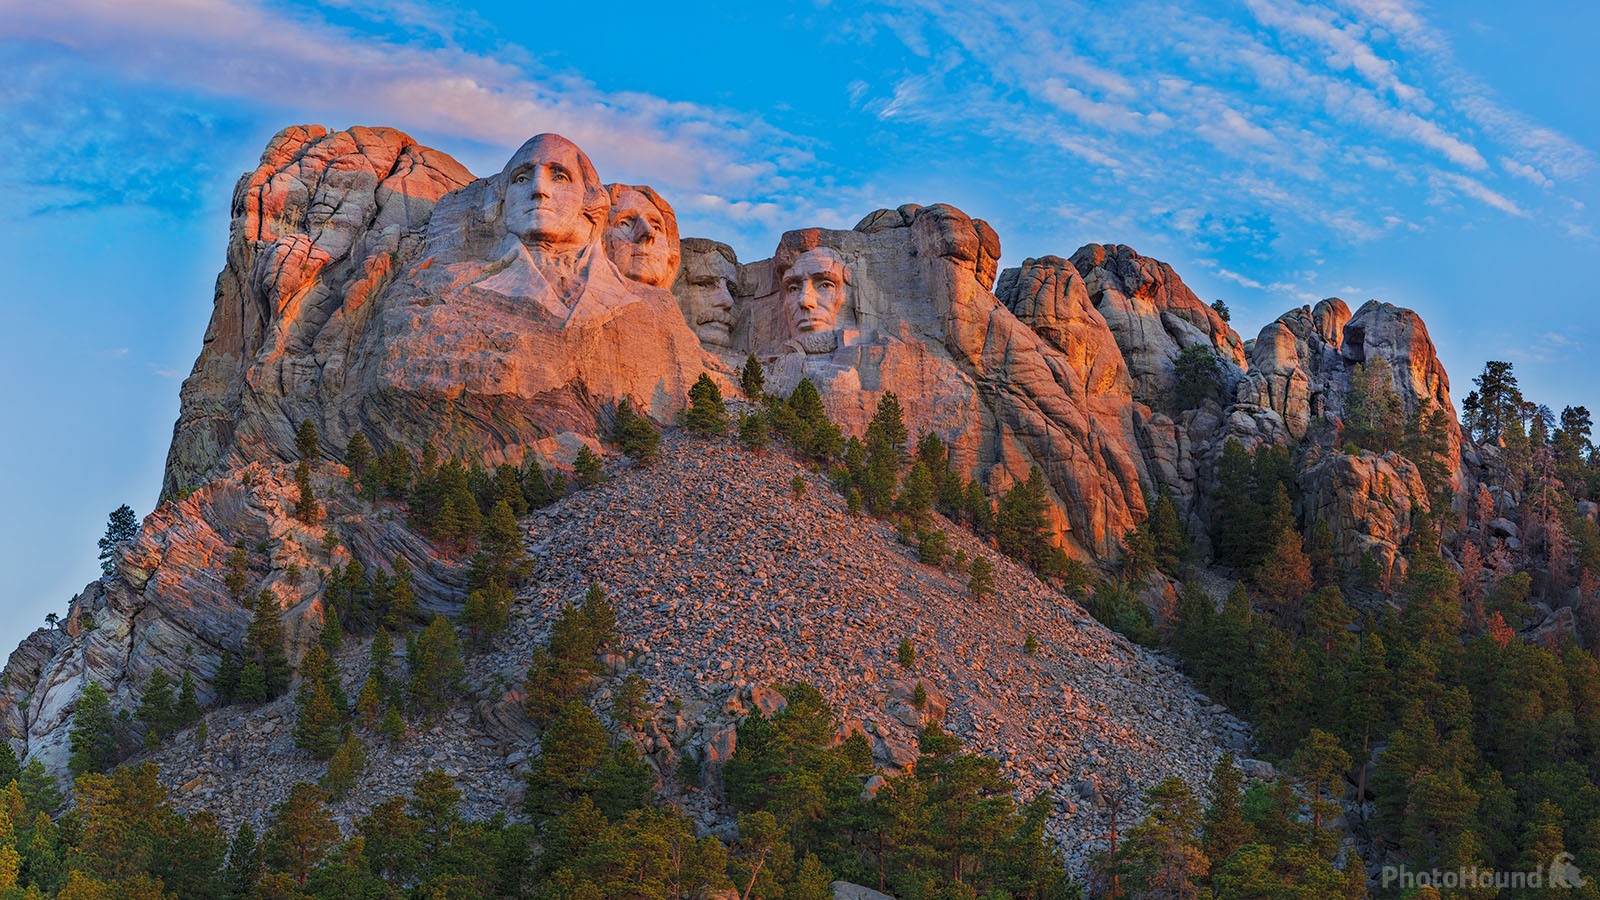 Image of Mount Rushmore National Memorial by John Freeman